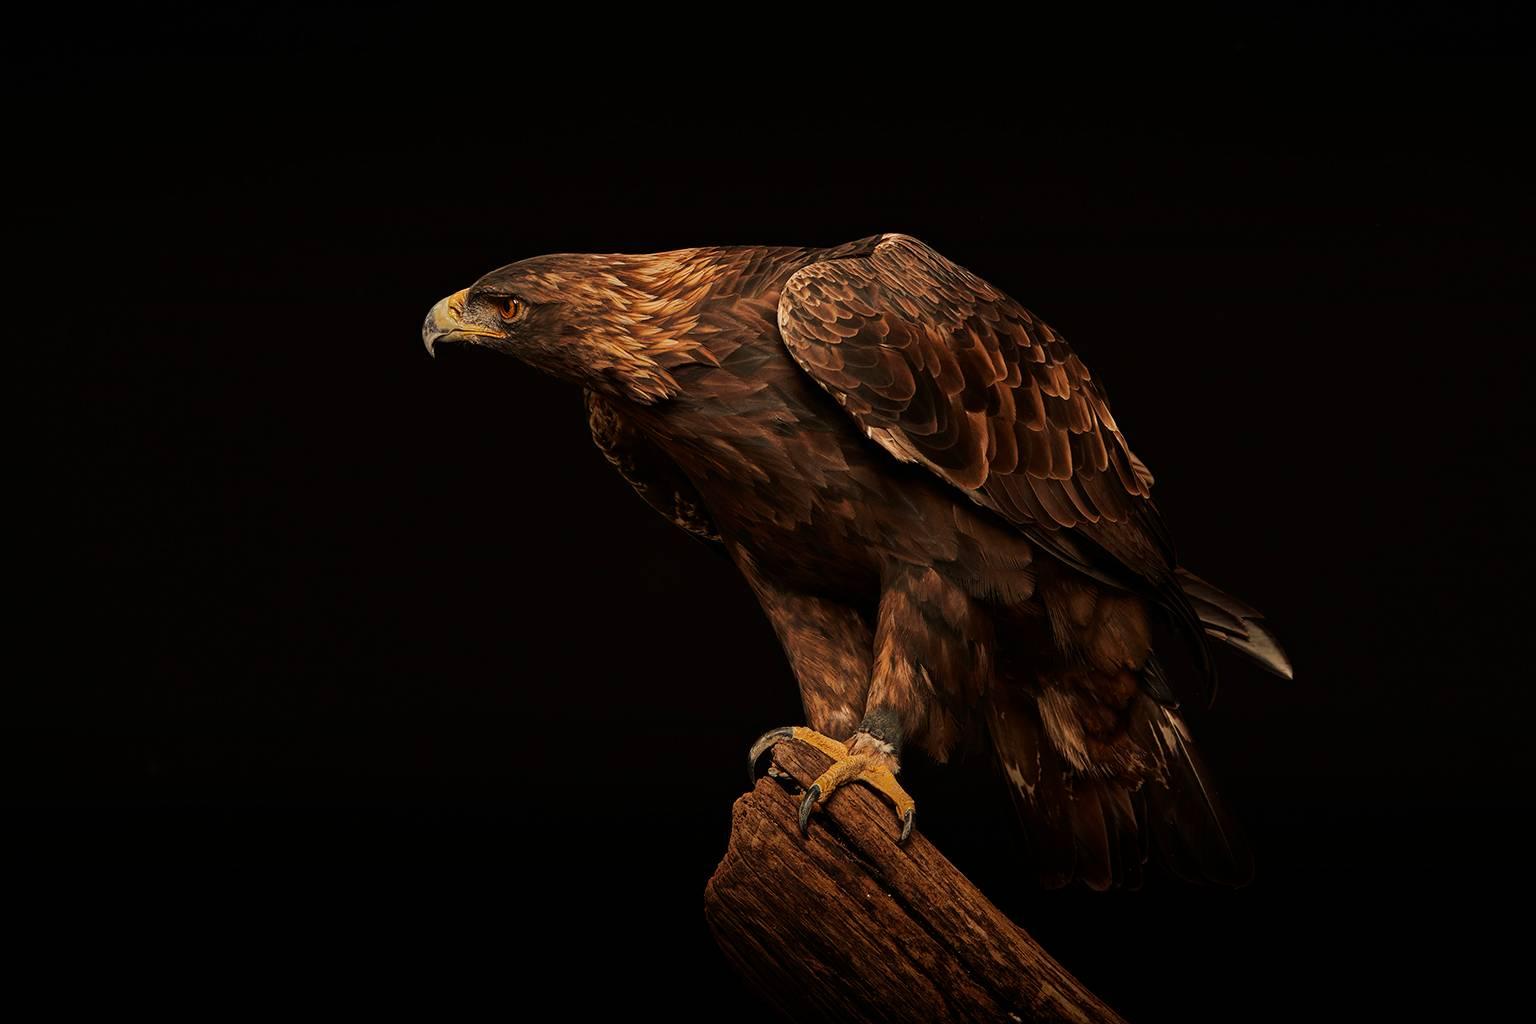 Chris Gordaneer Portrait Photograph - Birds of Prey - Golden Eagle No. 21